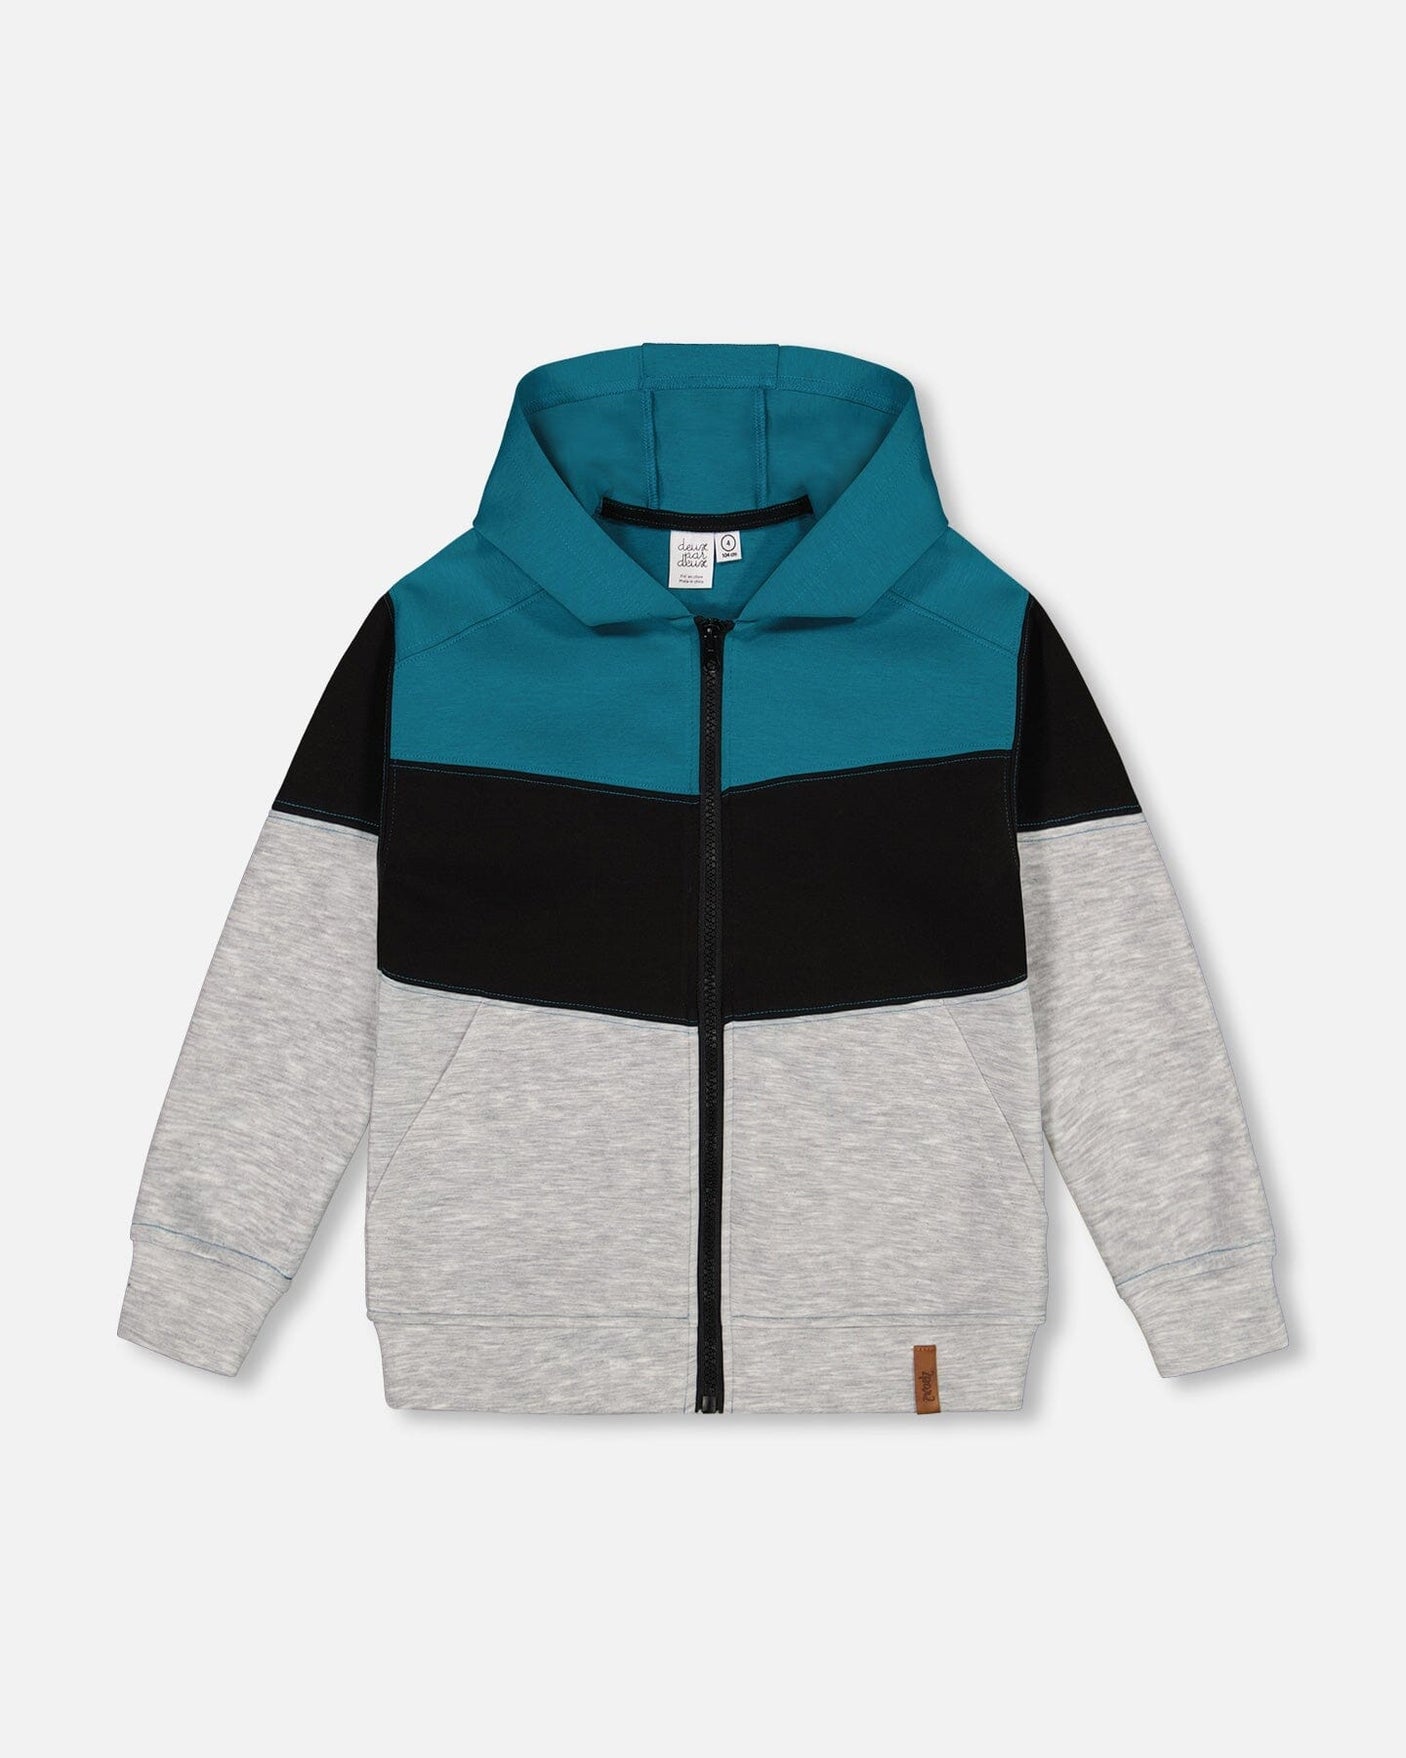 Neoprene Hooded Jacket Light Grey, Black And Teal Color Block-0